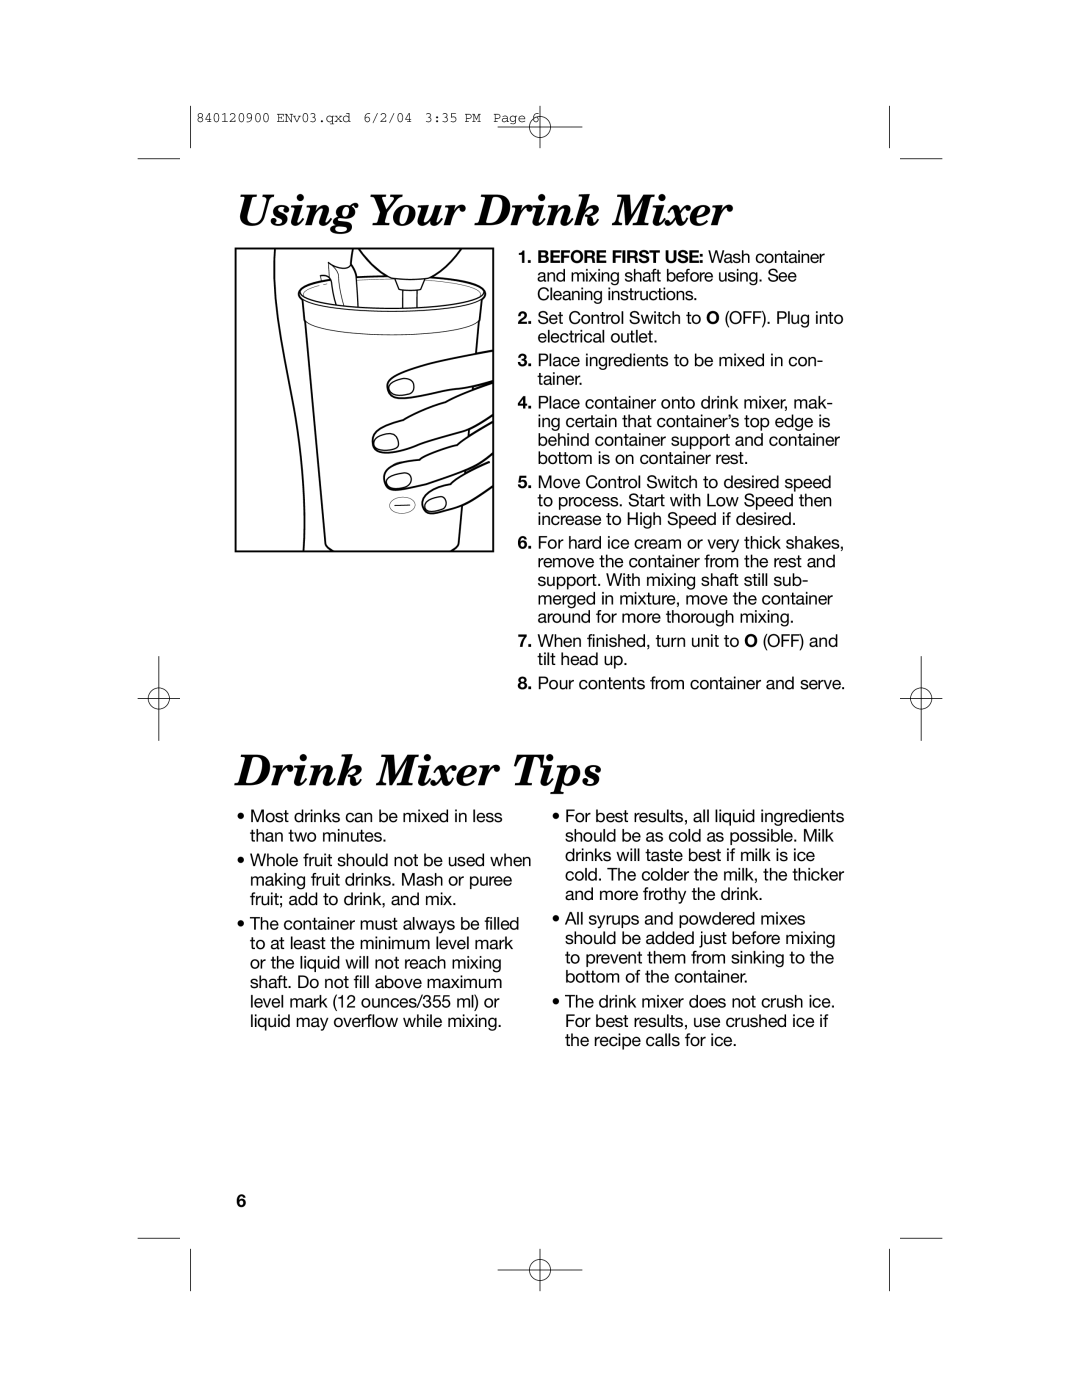 Hamilton Beach ALL-METAL DRINK MIXER manual Using Your Drink Mixer, Drink Mixer Tips 